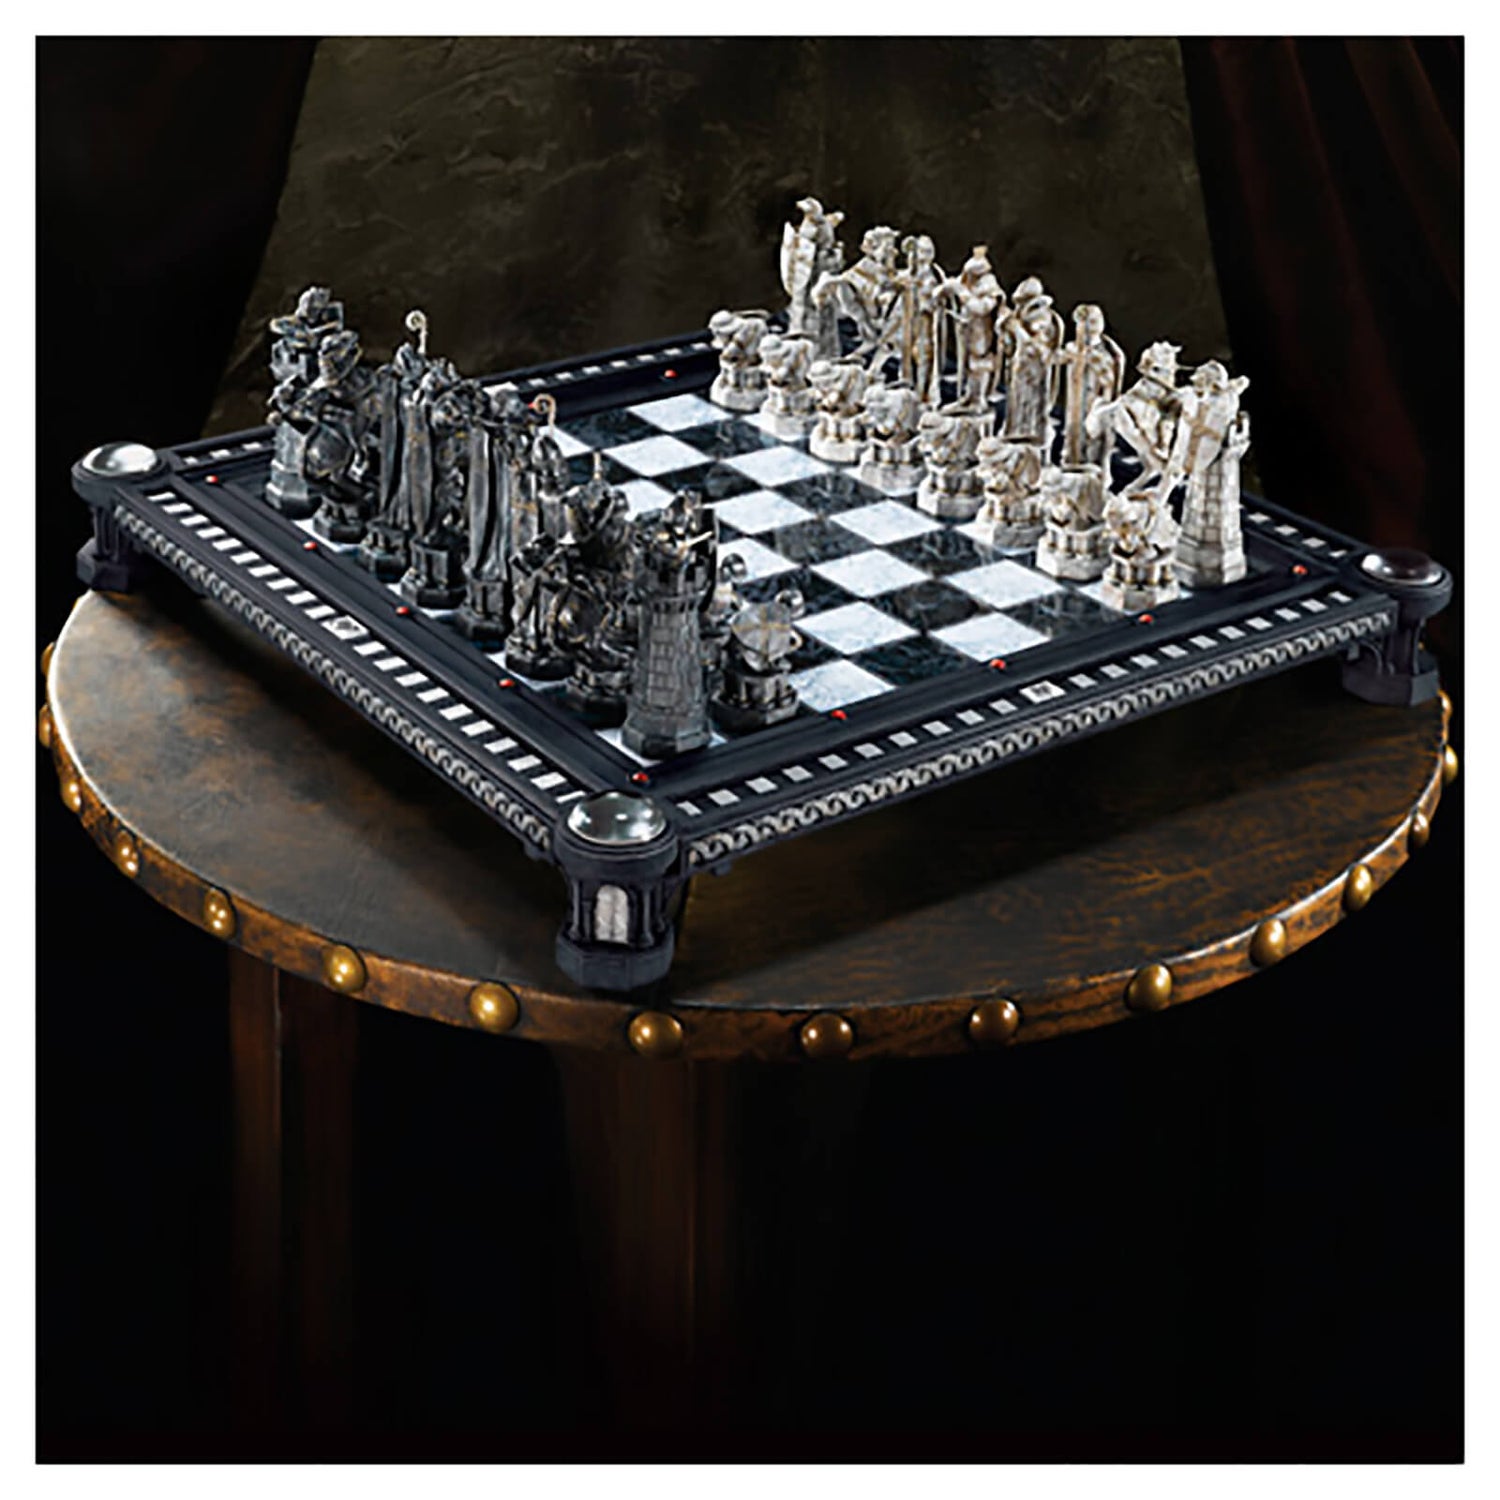 Hans strikes back at r/chess : r/chess